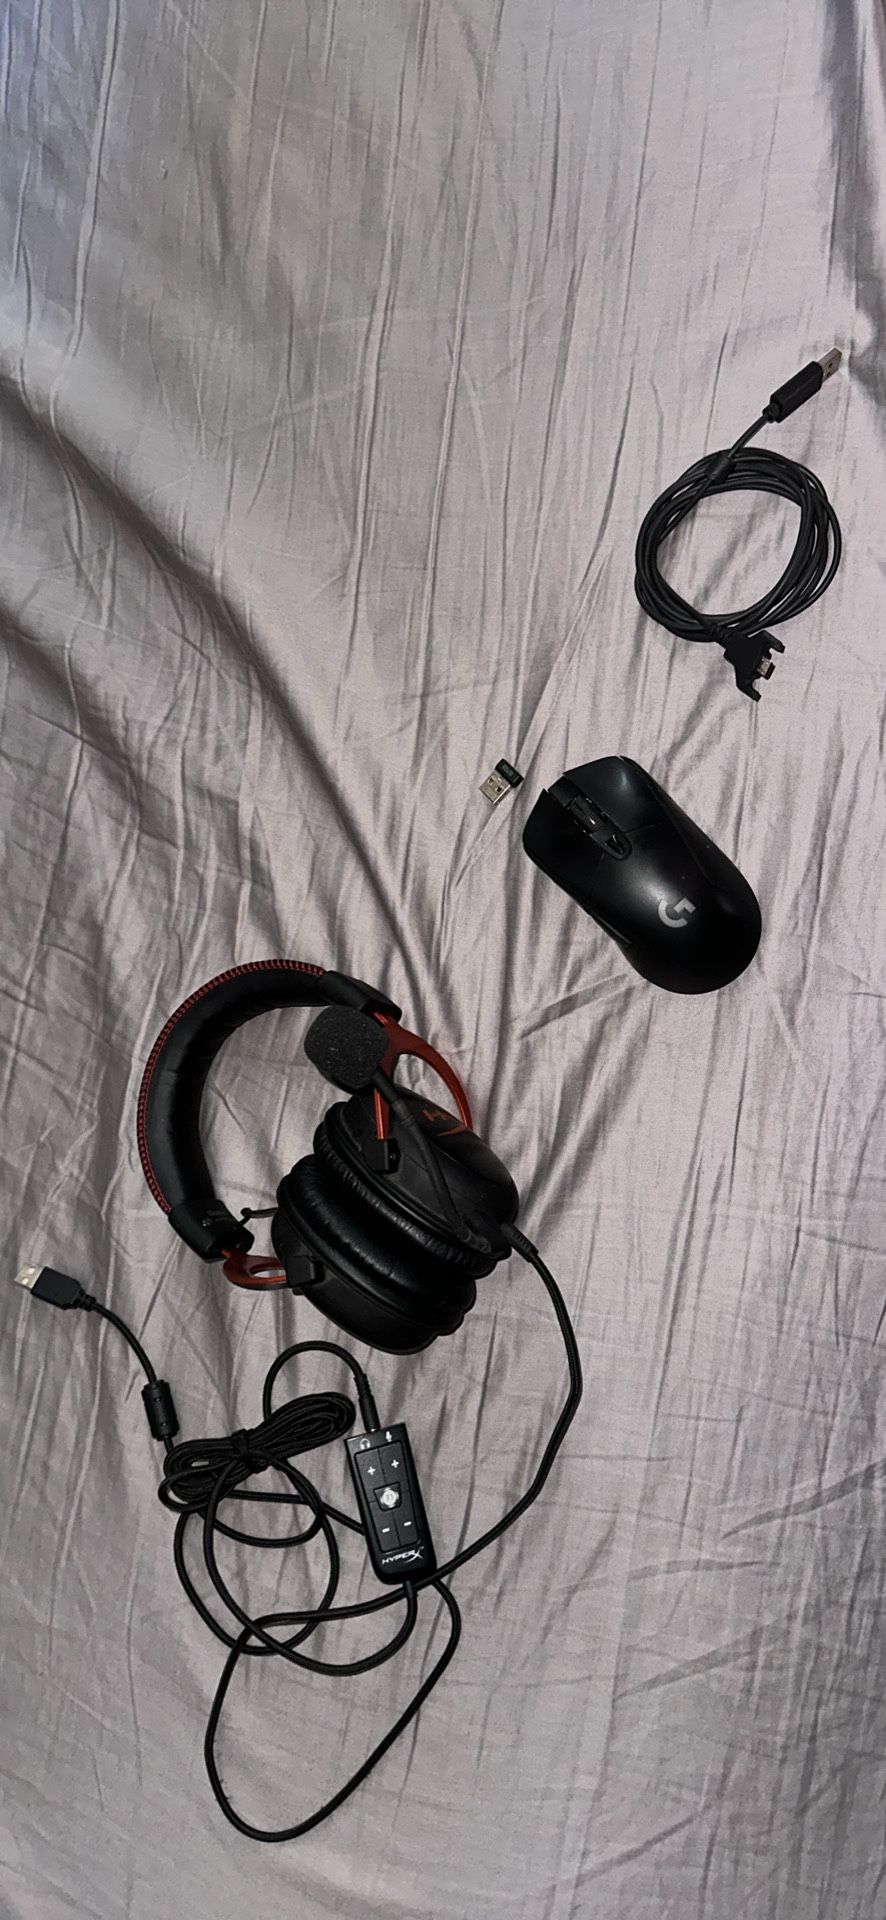 Hyper X Headset And Logitech Wireless Mouse